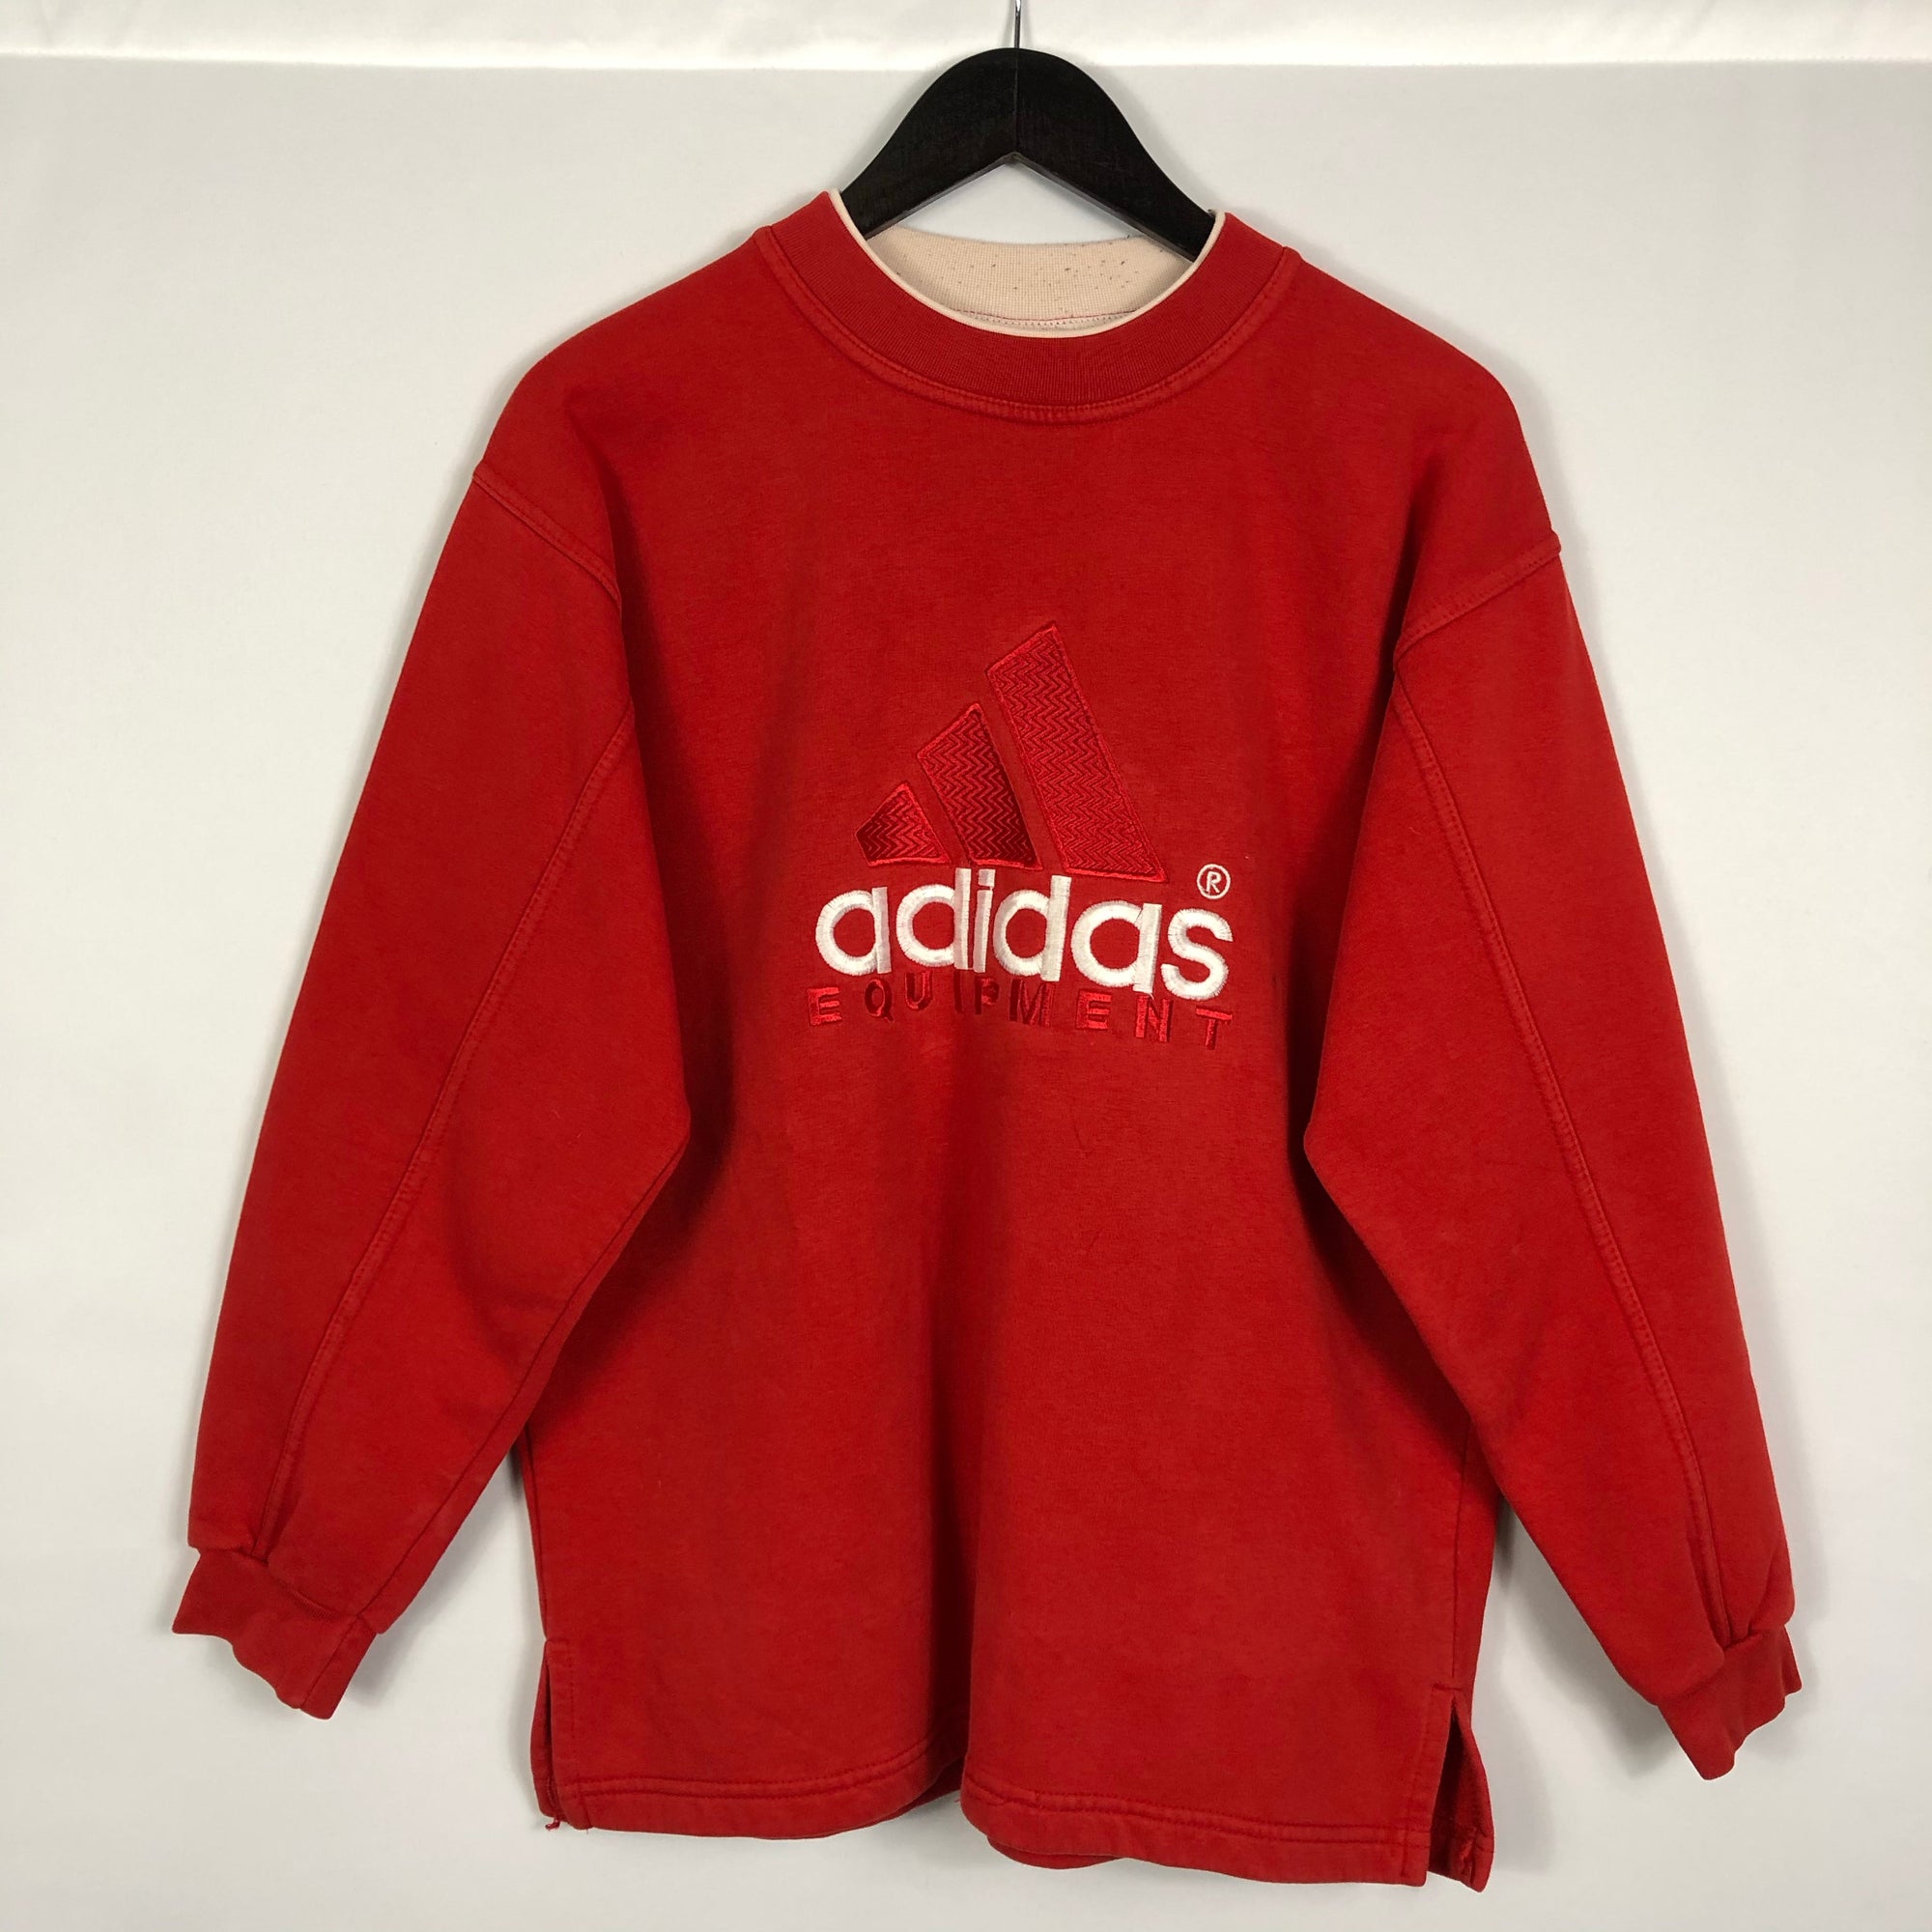 Vintage Adidas Equipment Sweatshirt in Red - Women’s Medium/Men’s Small